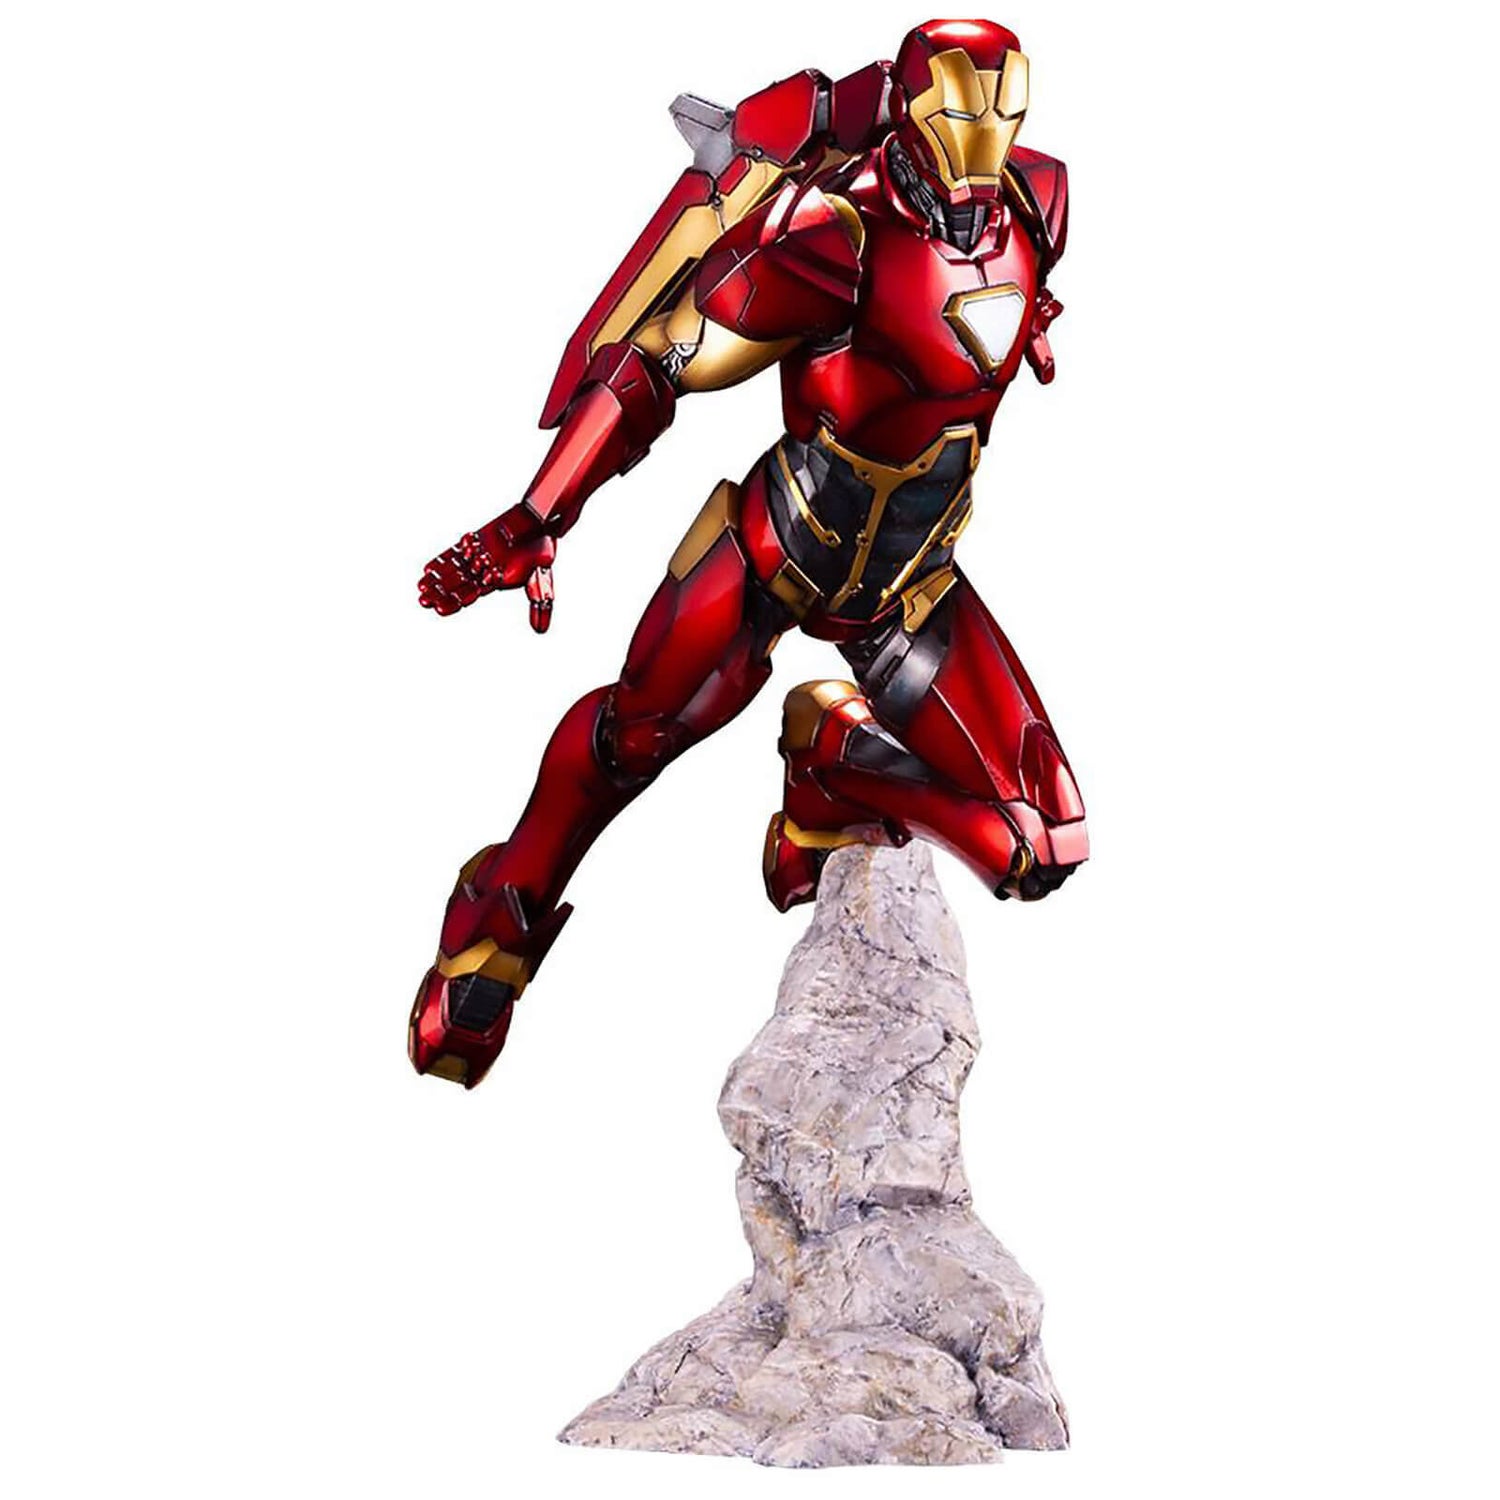 Kotobukiya Marvel Iron Man Limited Edition Premier ARTFX 1:10 Scale Statue